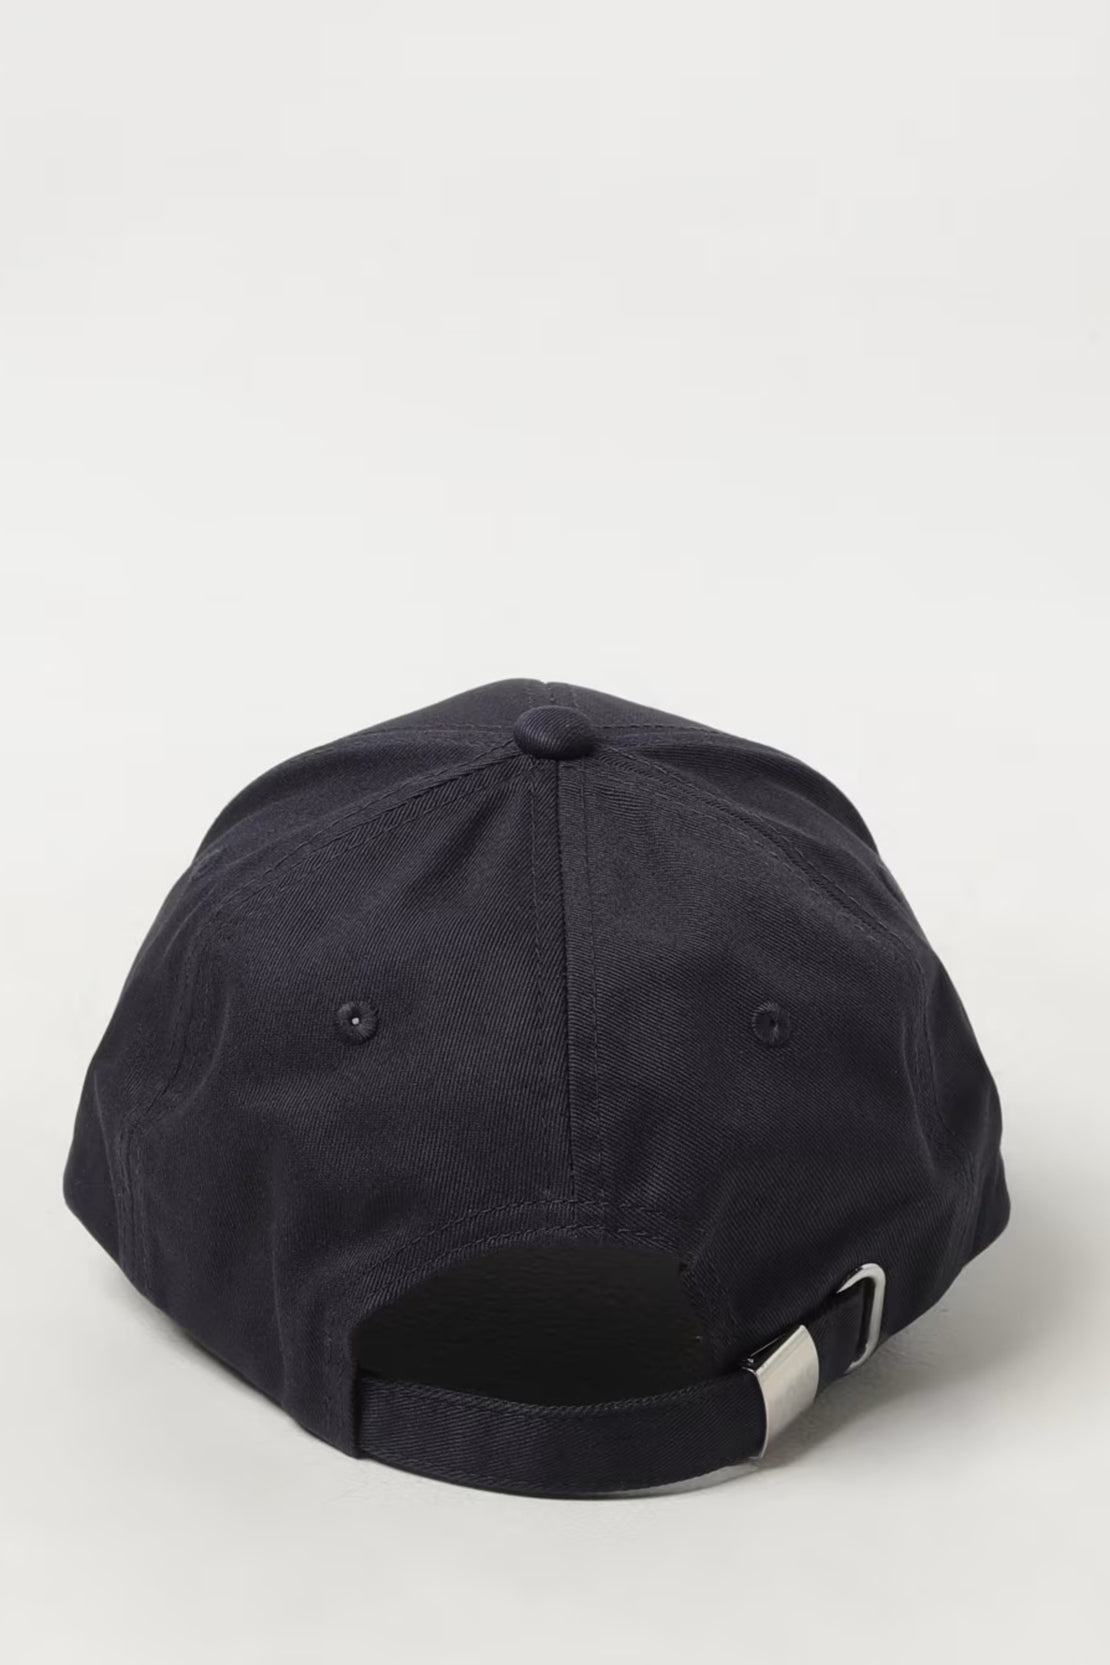 BOSS - CAP-BOLD - Dark Blue Cotton Twill Cap With Printed Logo 50505834 402